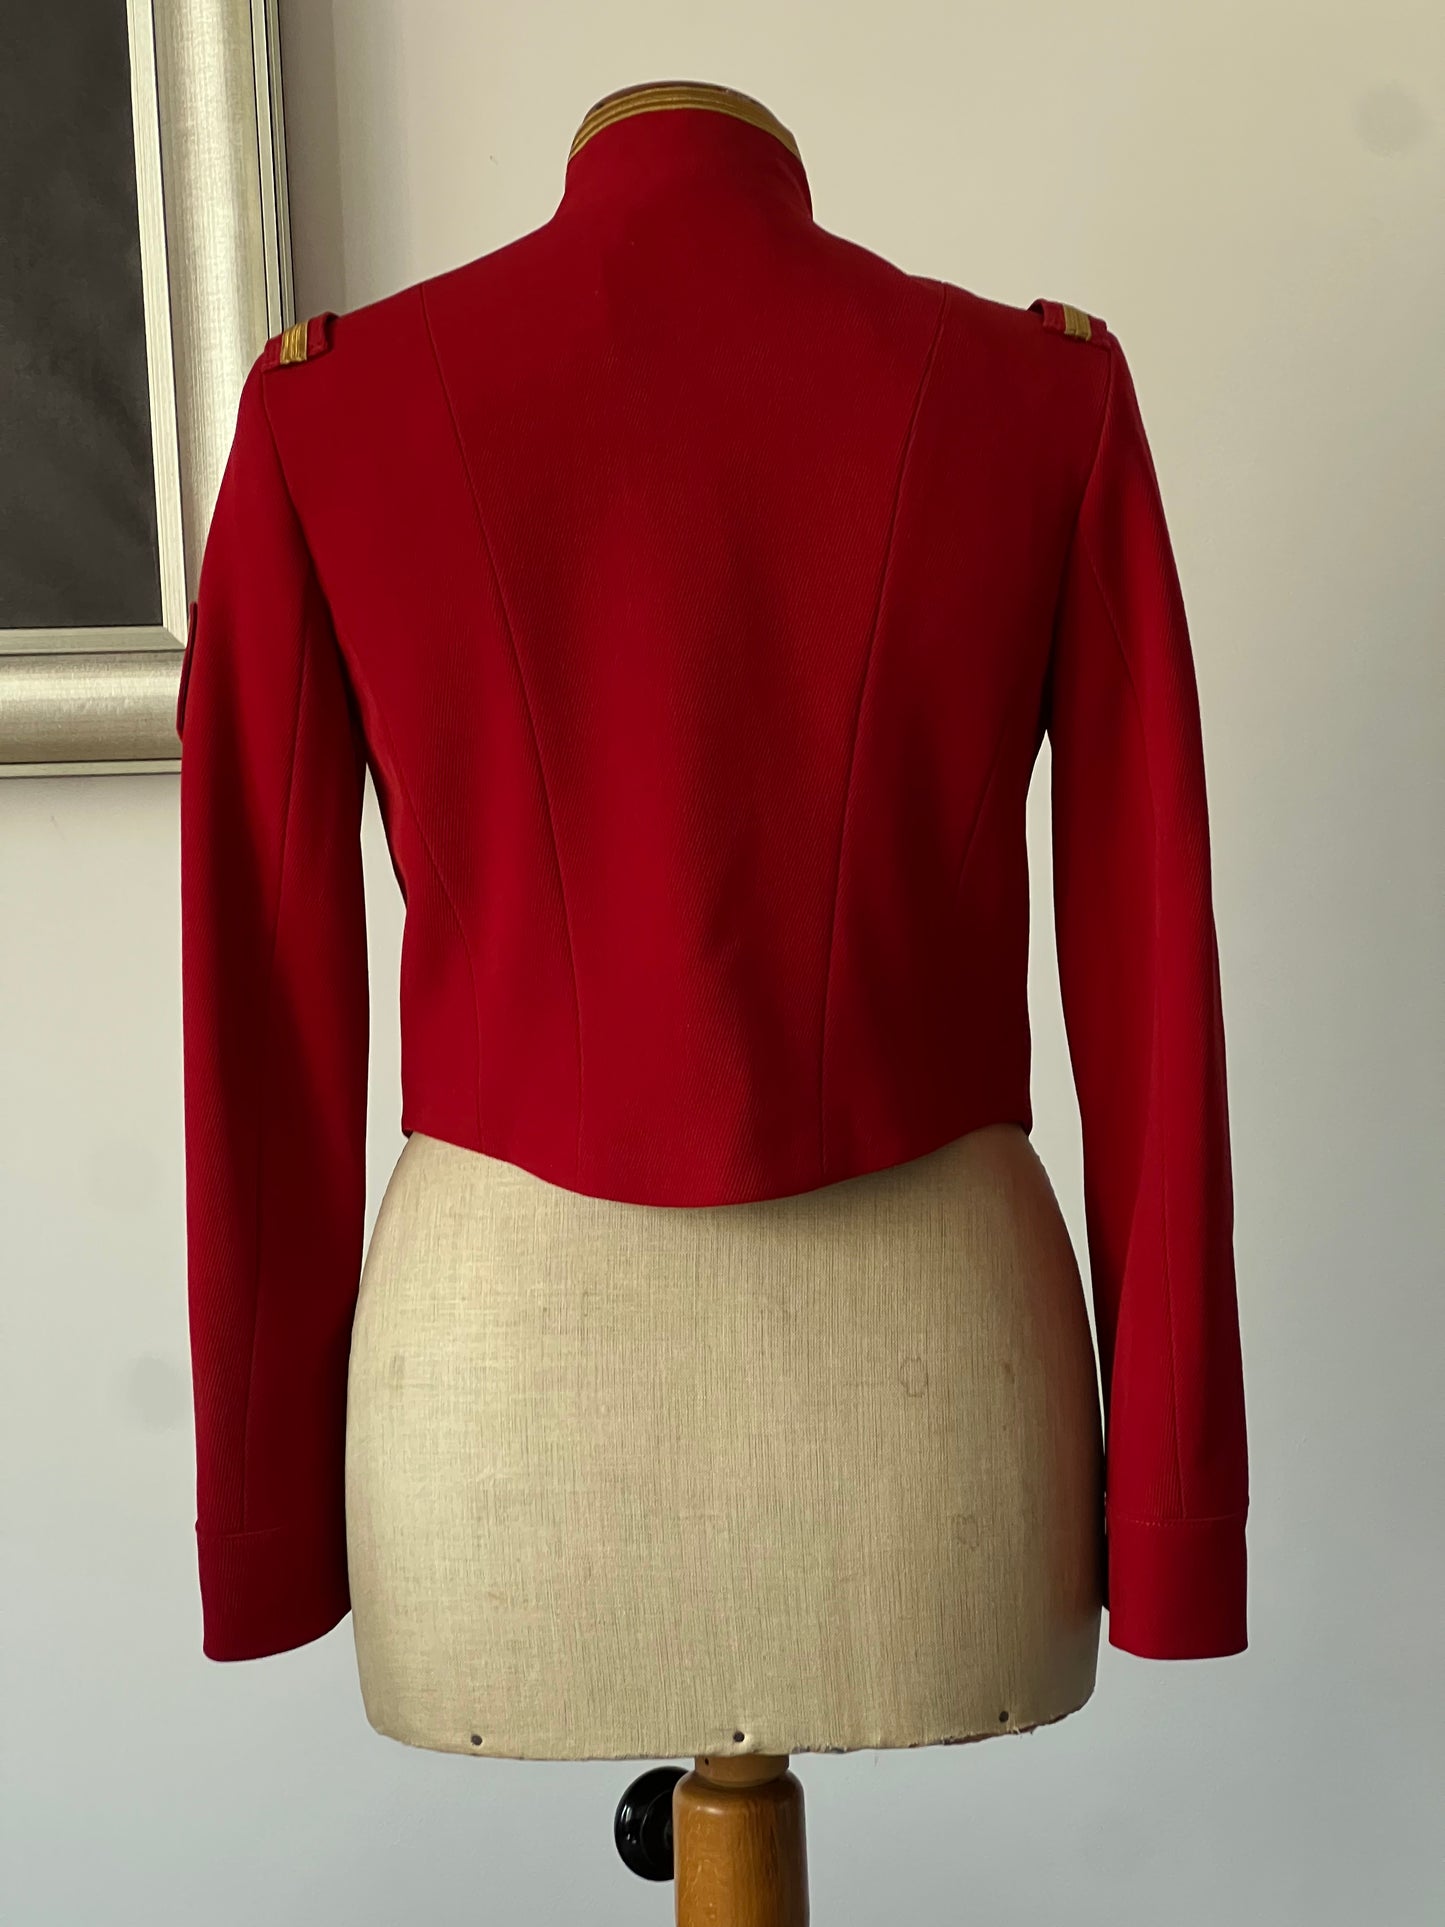 back of a red vintage women’s jacket